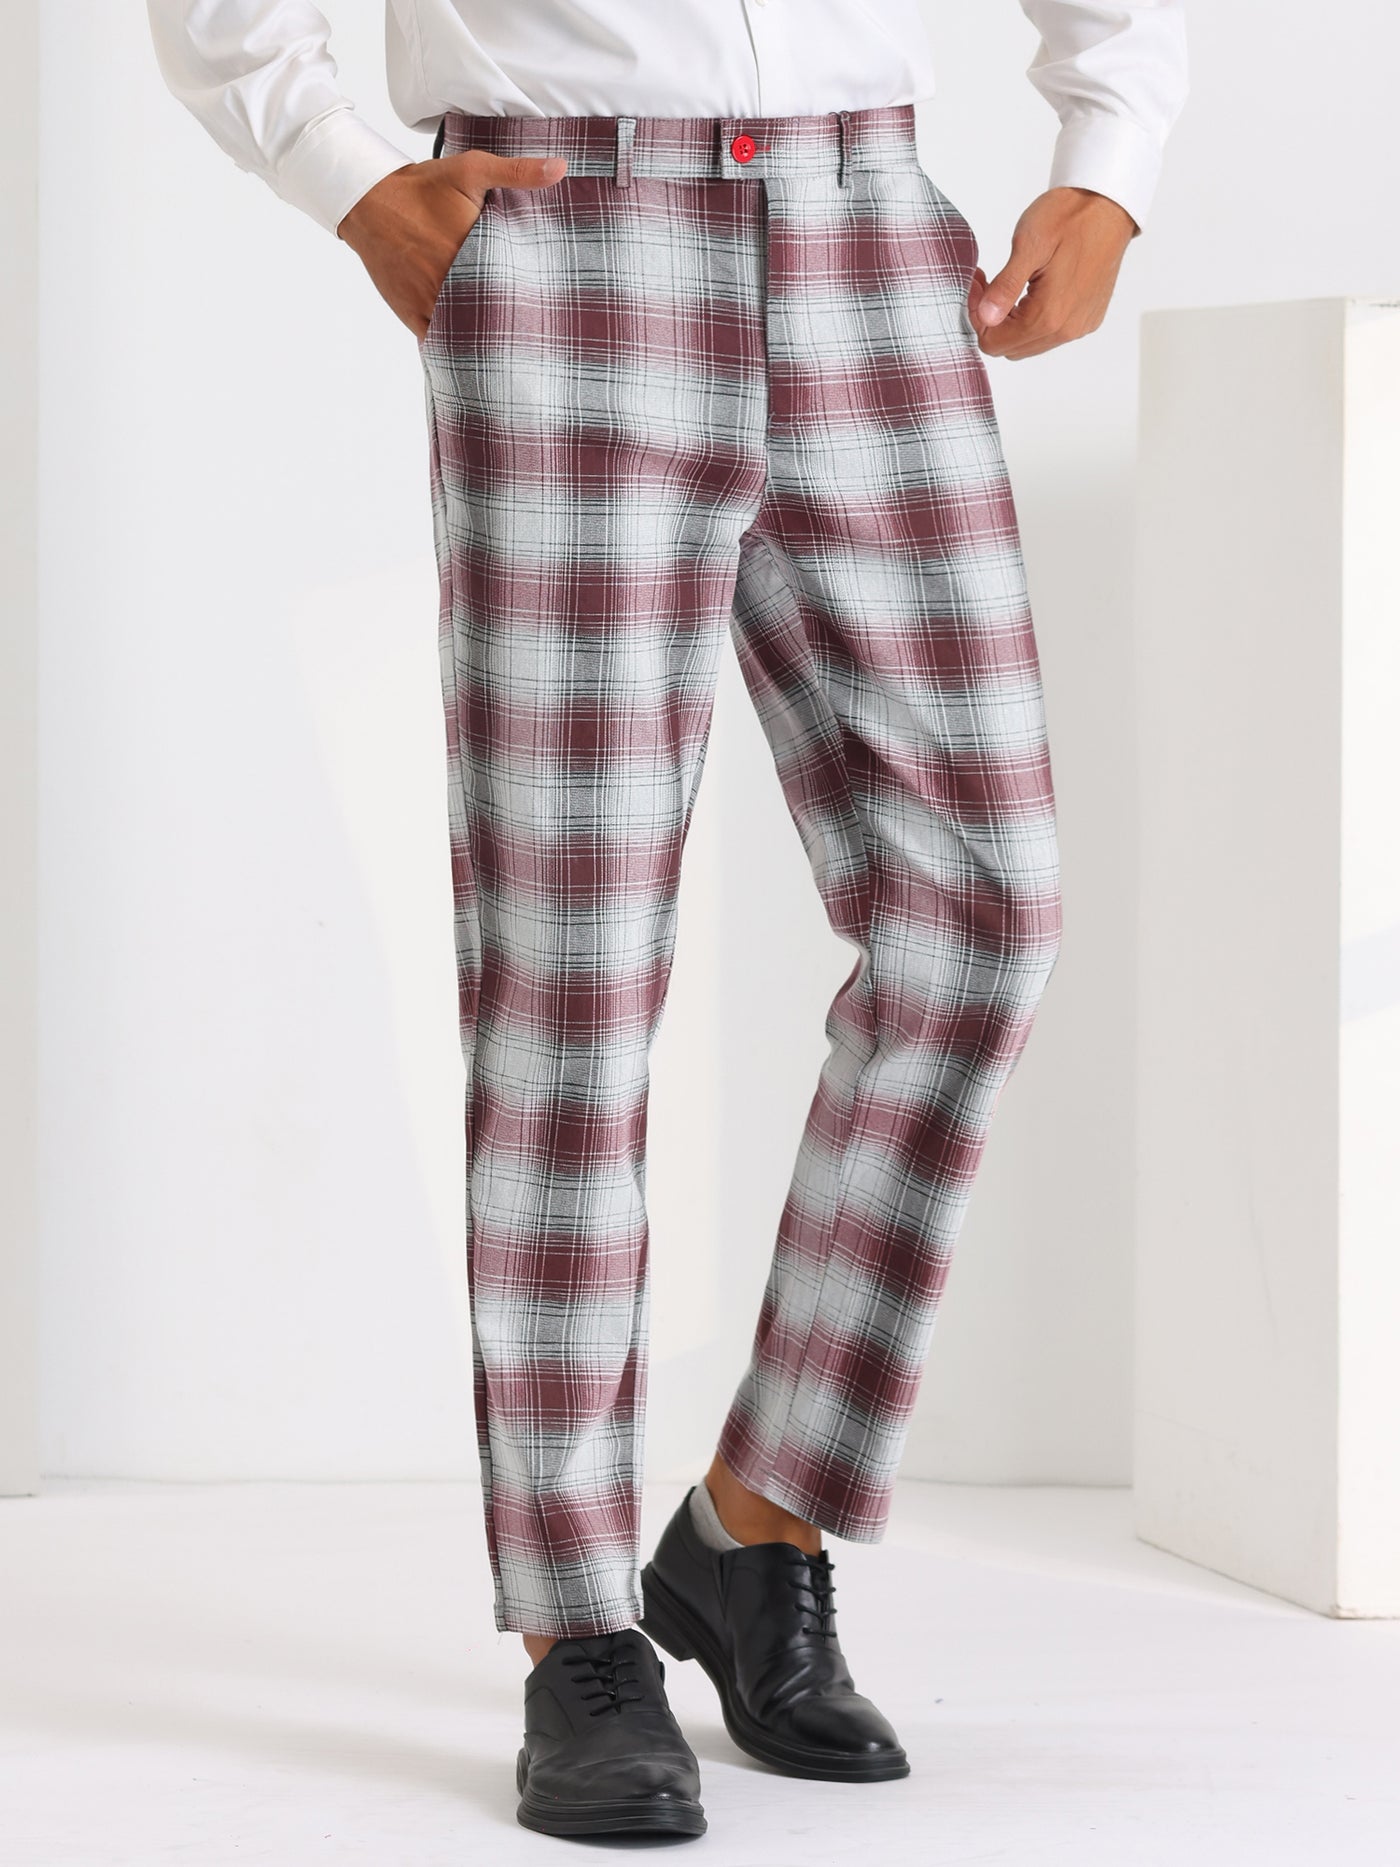 Bublédon Classic Checked Dress Pants for Men's Flat Front Plaid Pattern Trousers